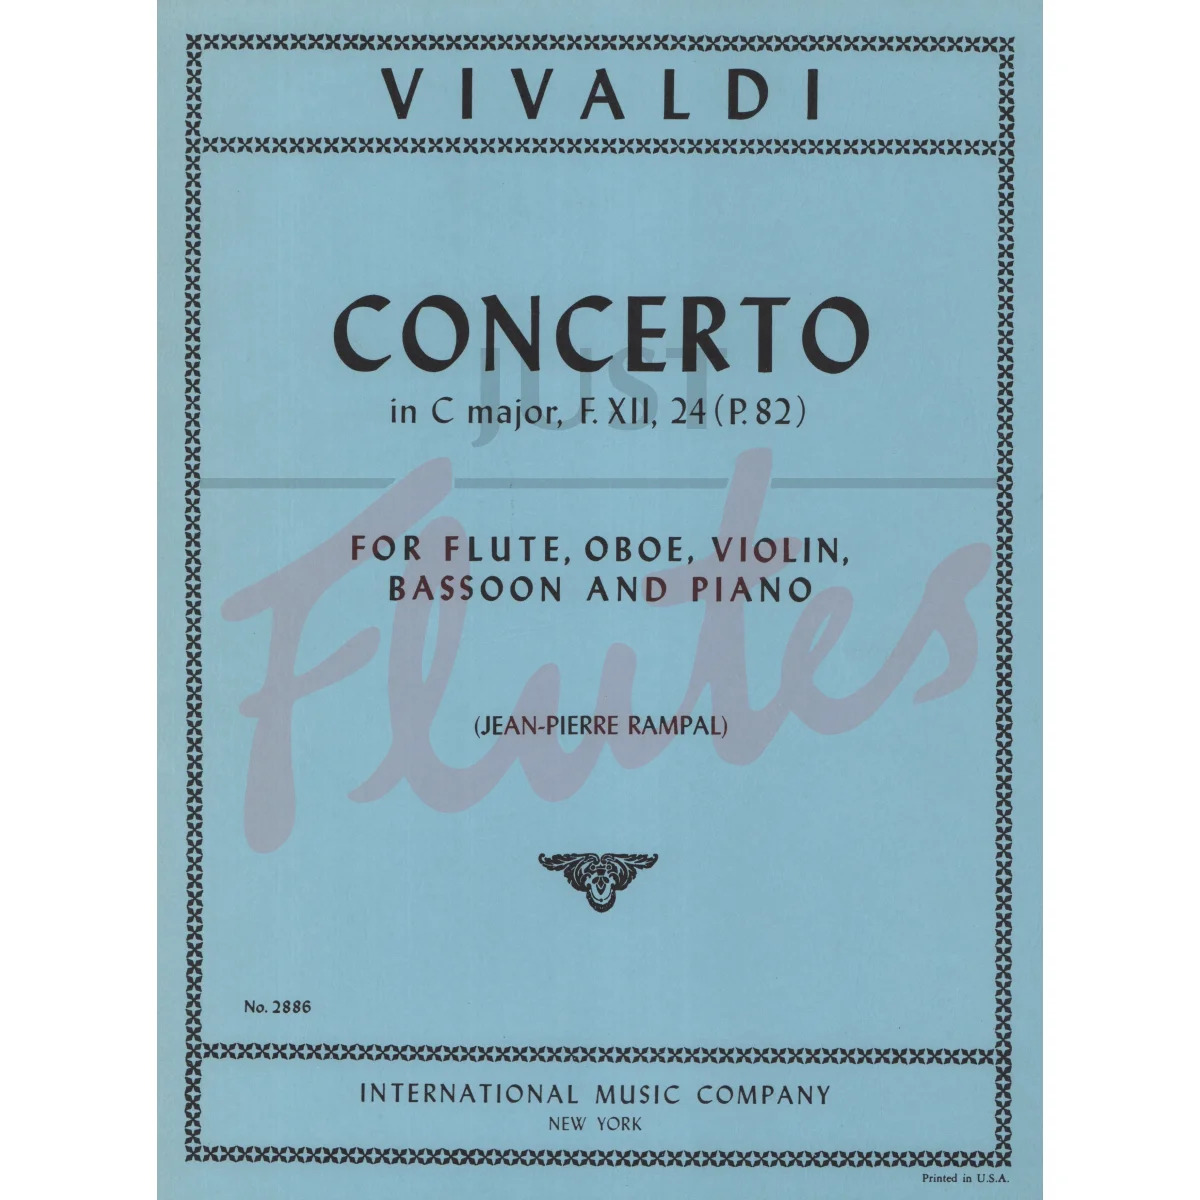 Concerto in C major for Flute, Oboe, Violin, Bassoon and Piano